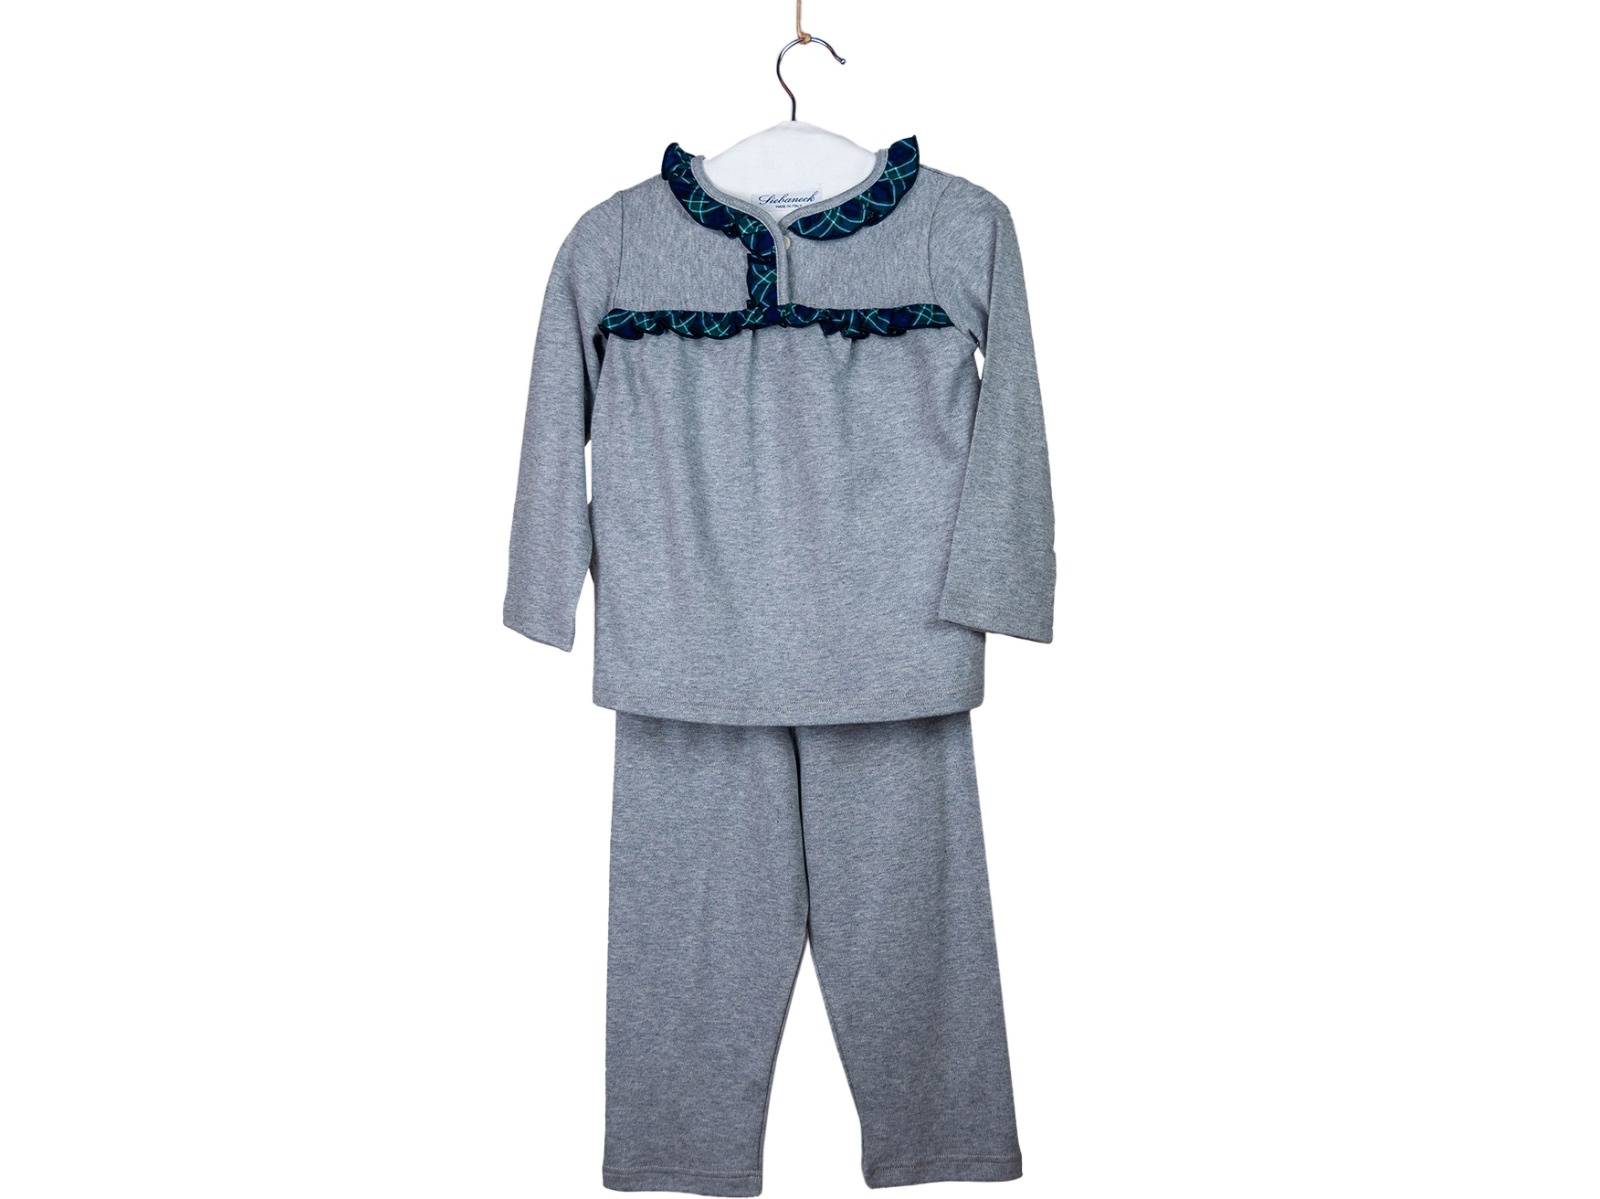 Siebaneck, i pigiami artigianali italiani: - bambina - mod. 101 Bimba grigio/blu